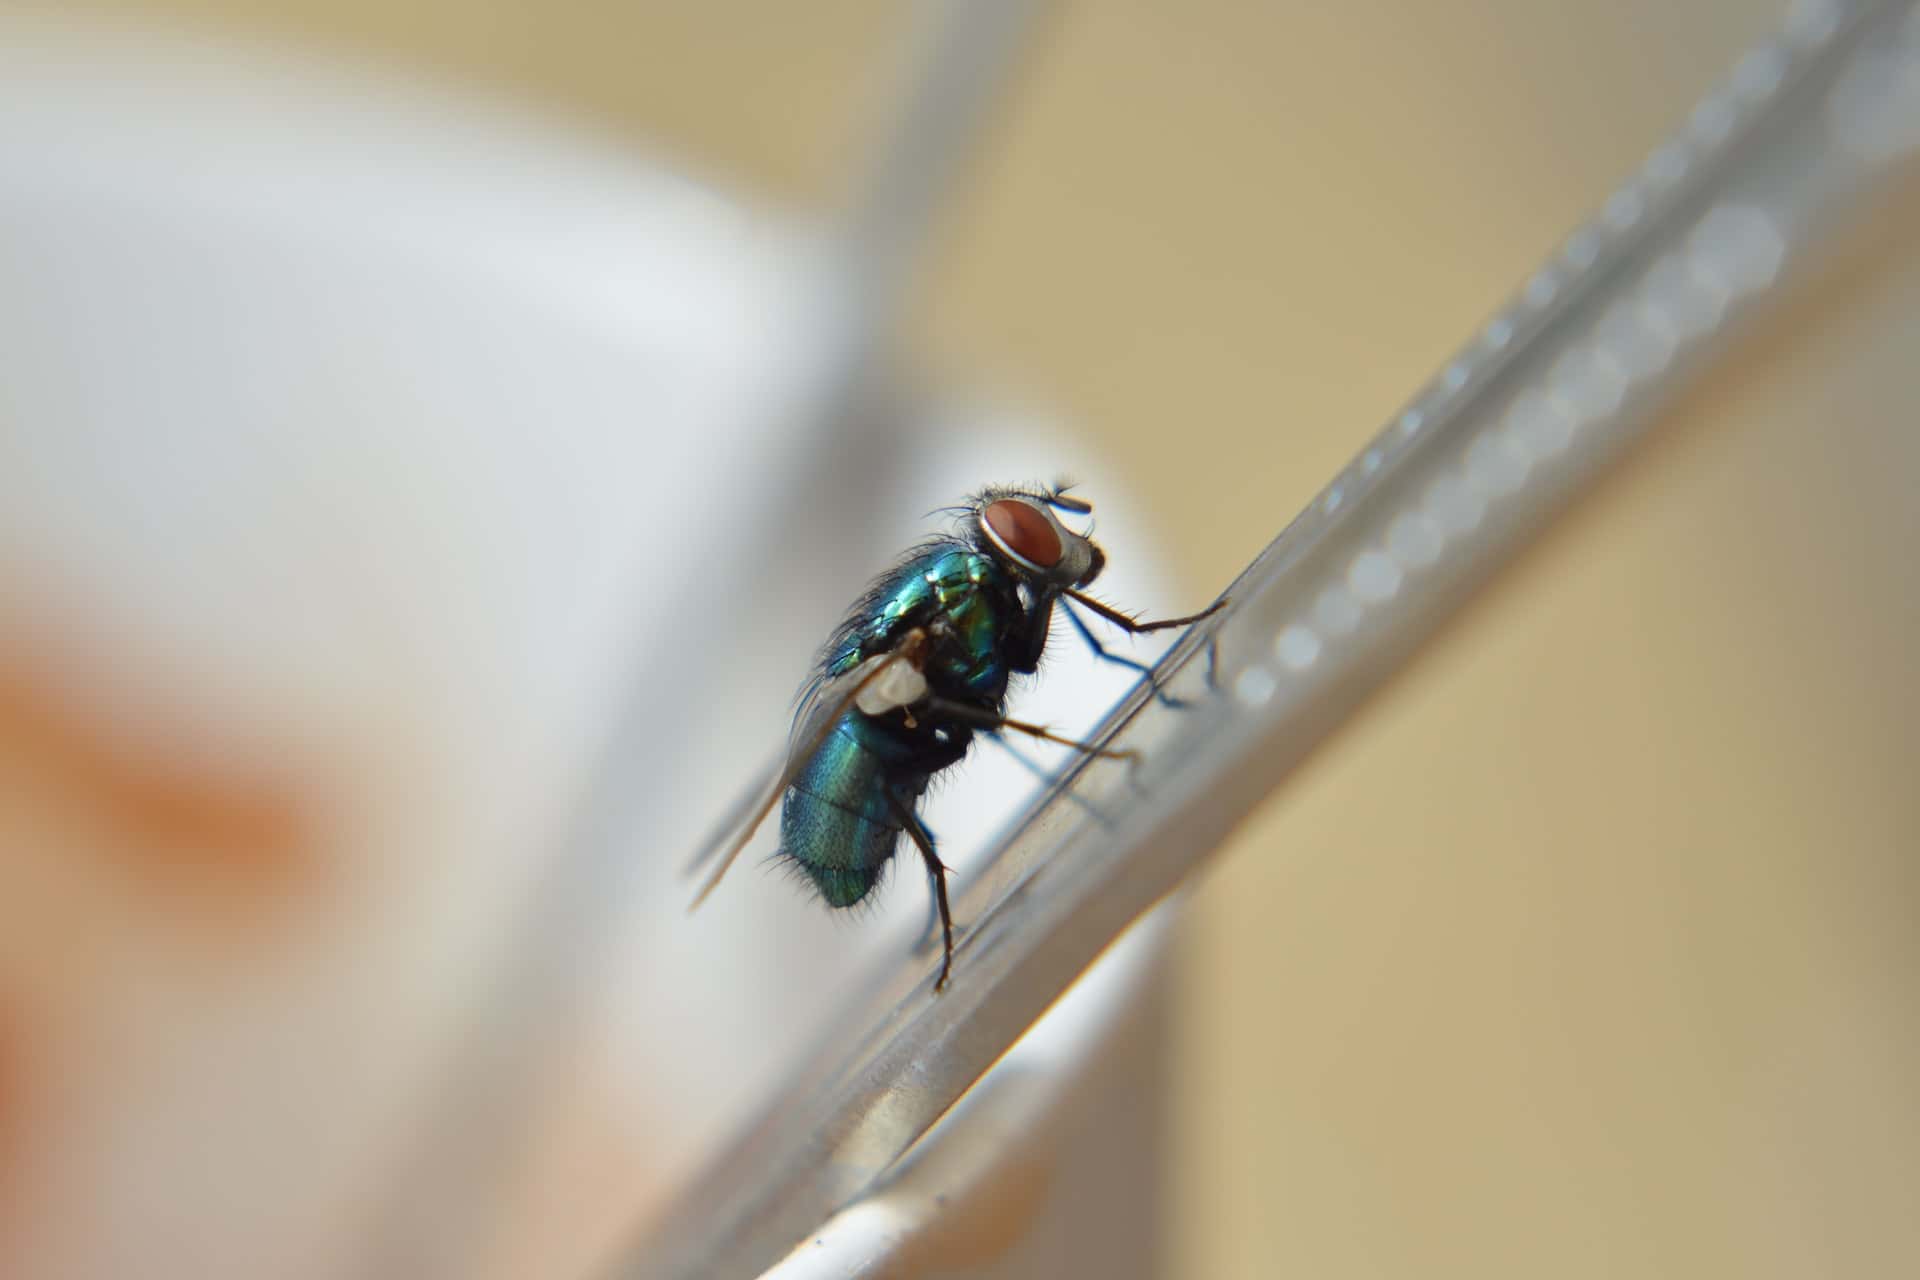 https://www.homelane.com/blog/wp-content/uploads/2022/11/how-to-get-rid-of-house-flies-naturally.jpg